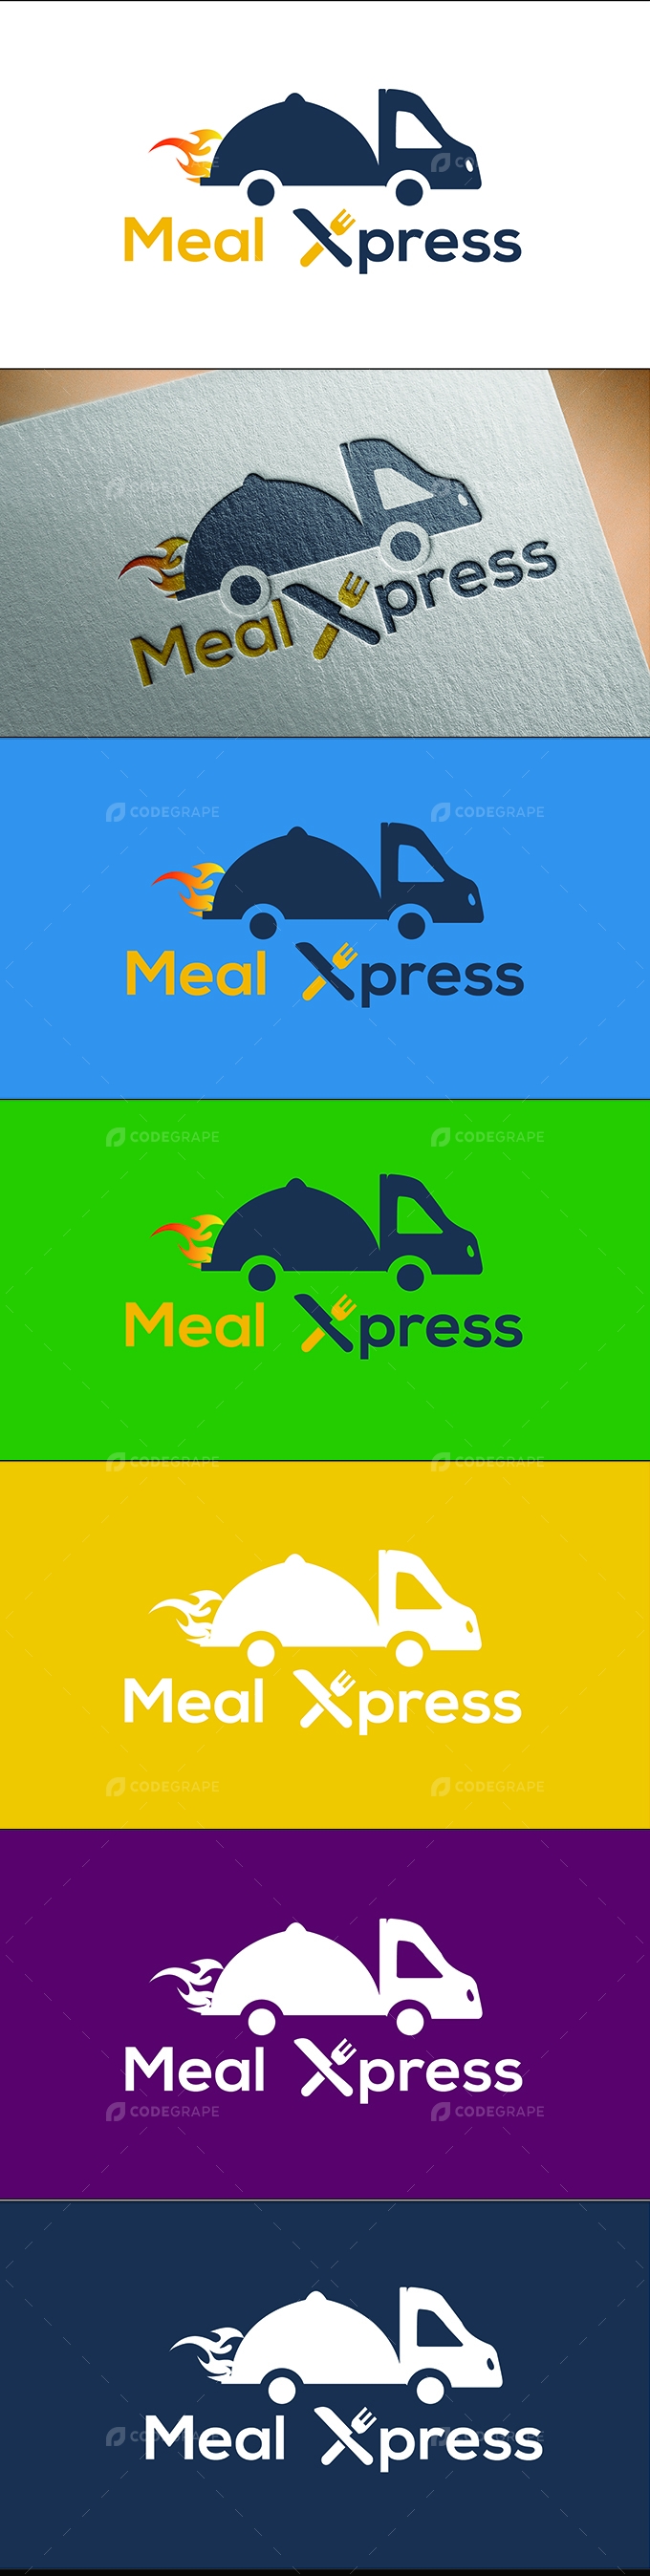 Meal Xpress Logo